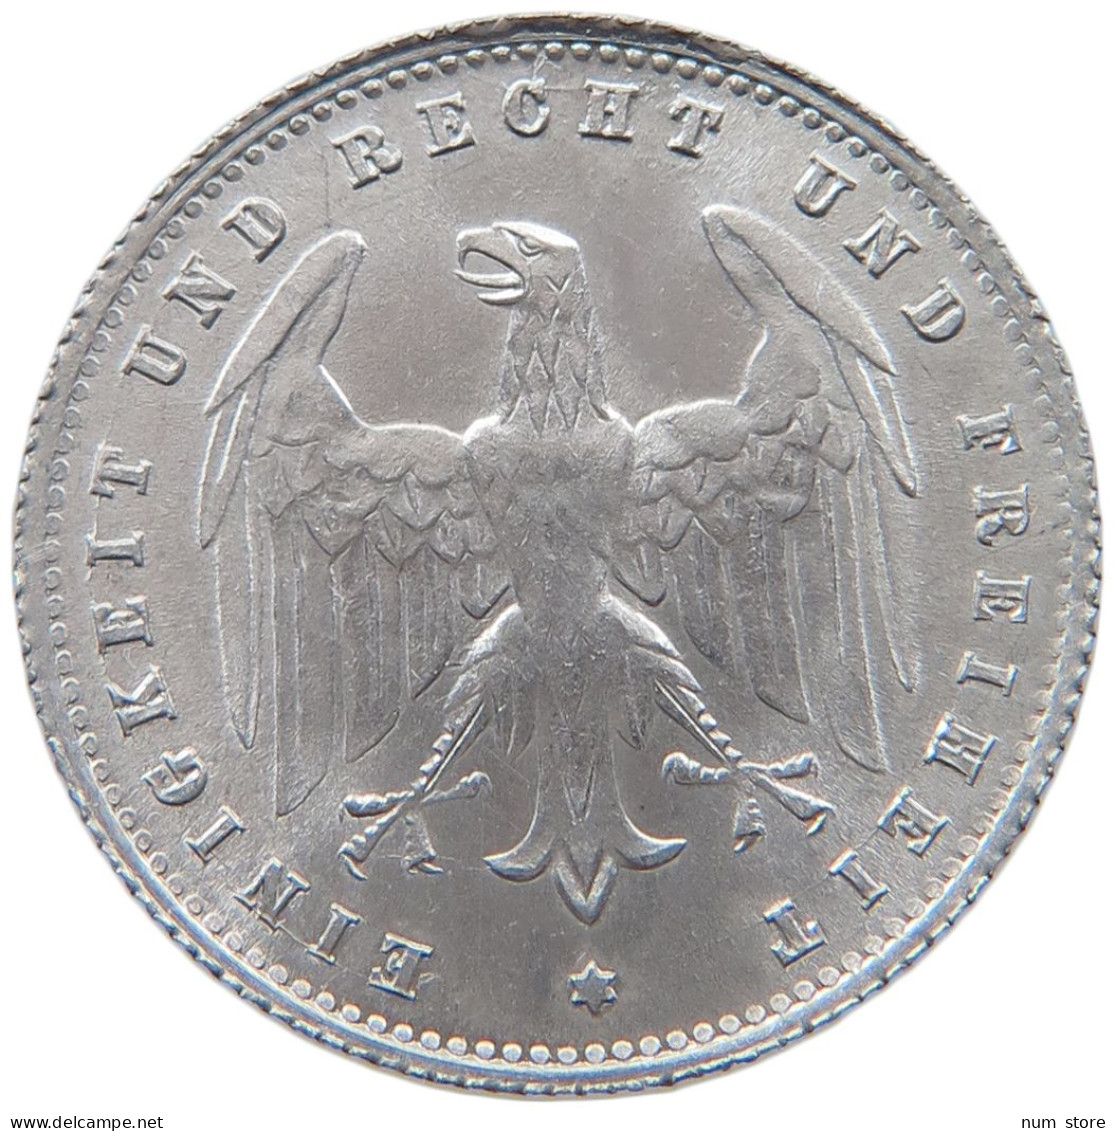 WEIMARER REPUBLIK 200 MARK 1923 G  #MA 098786 - 200 & 500 Mark